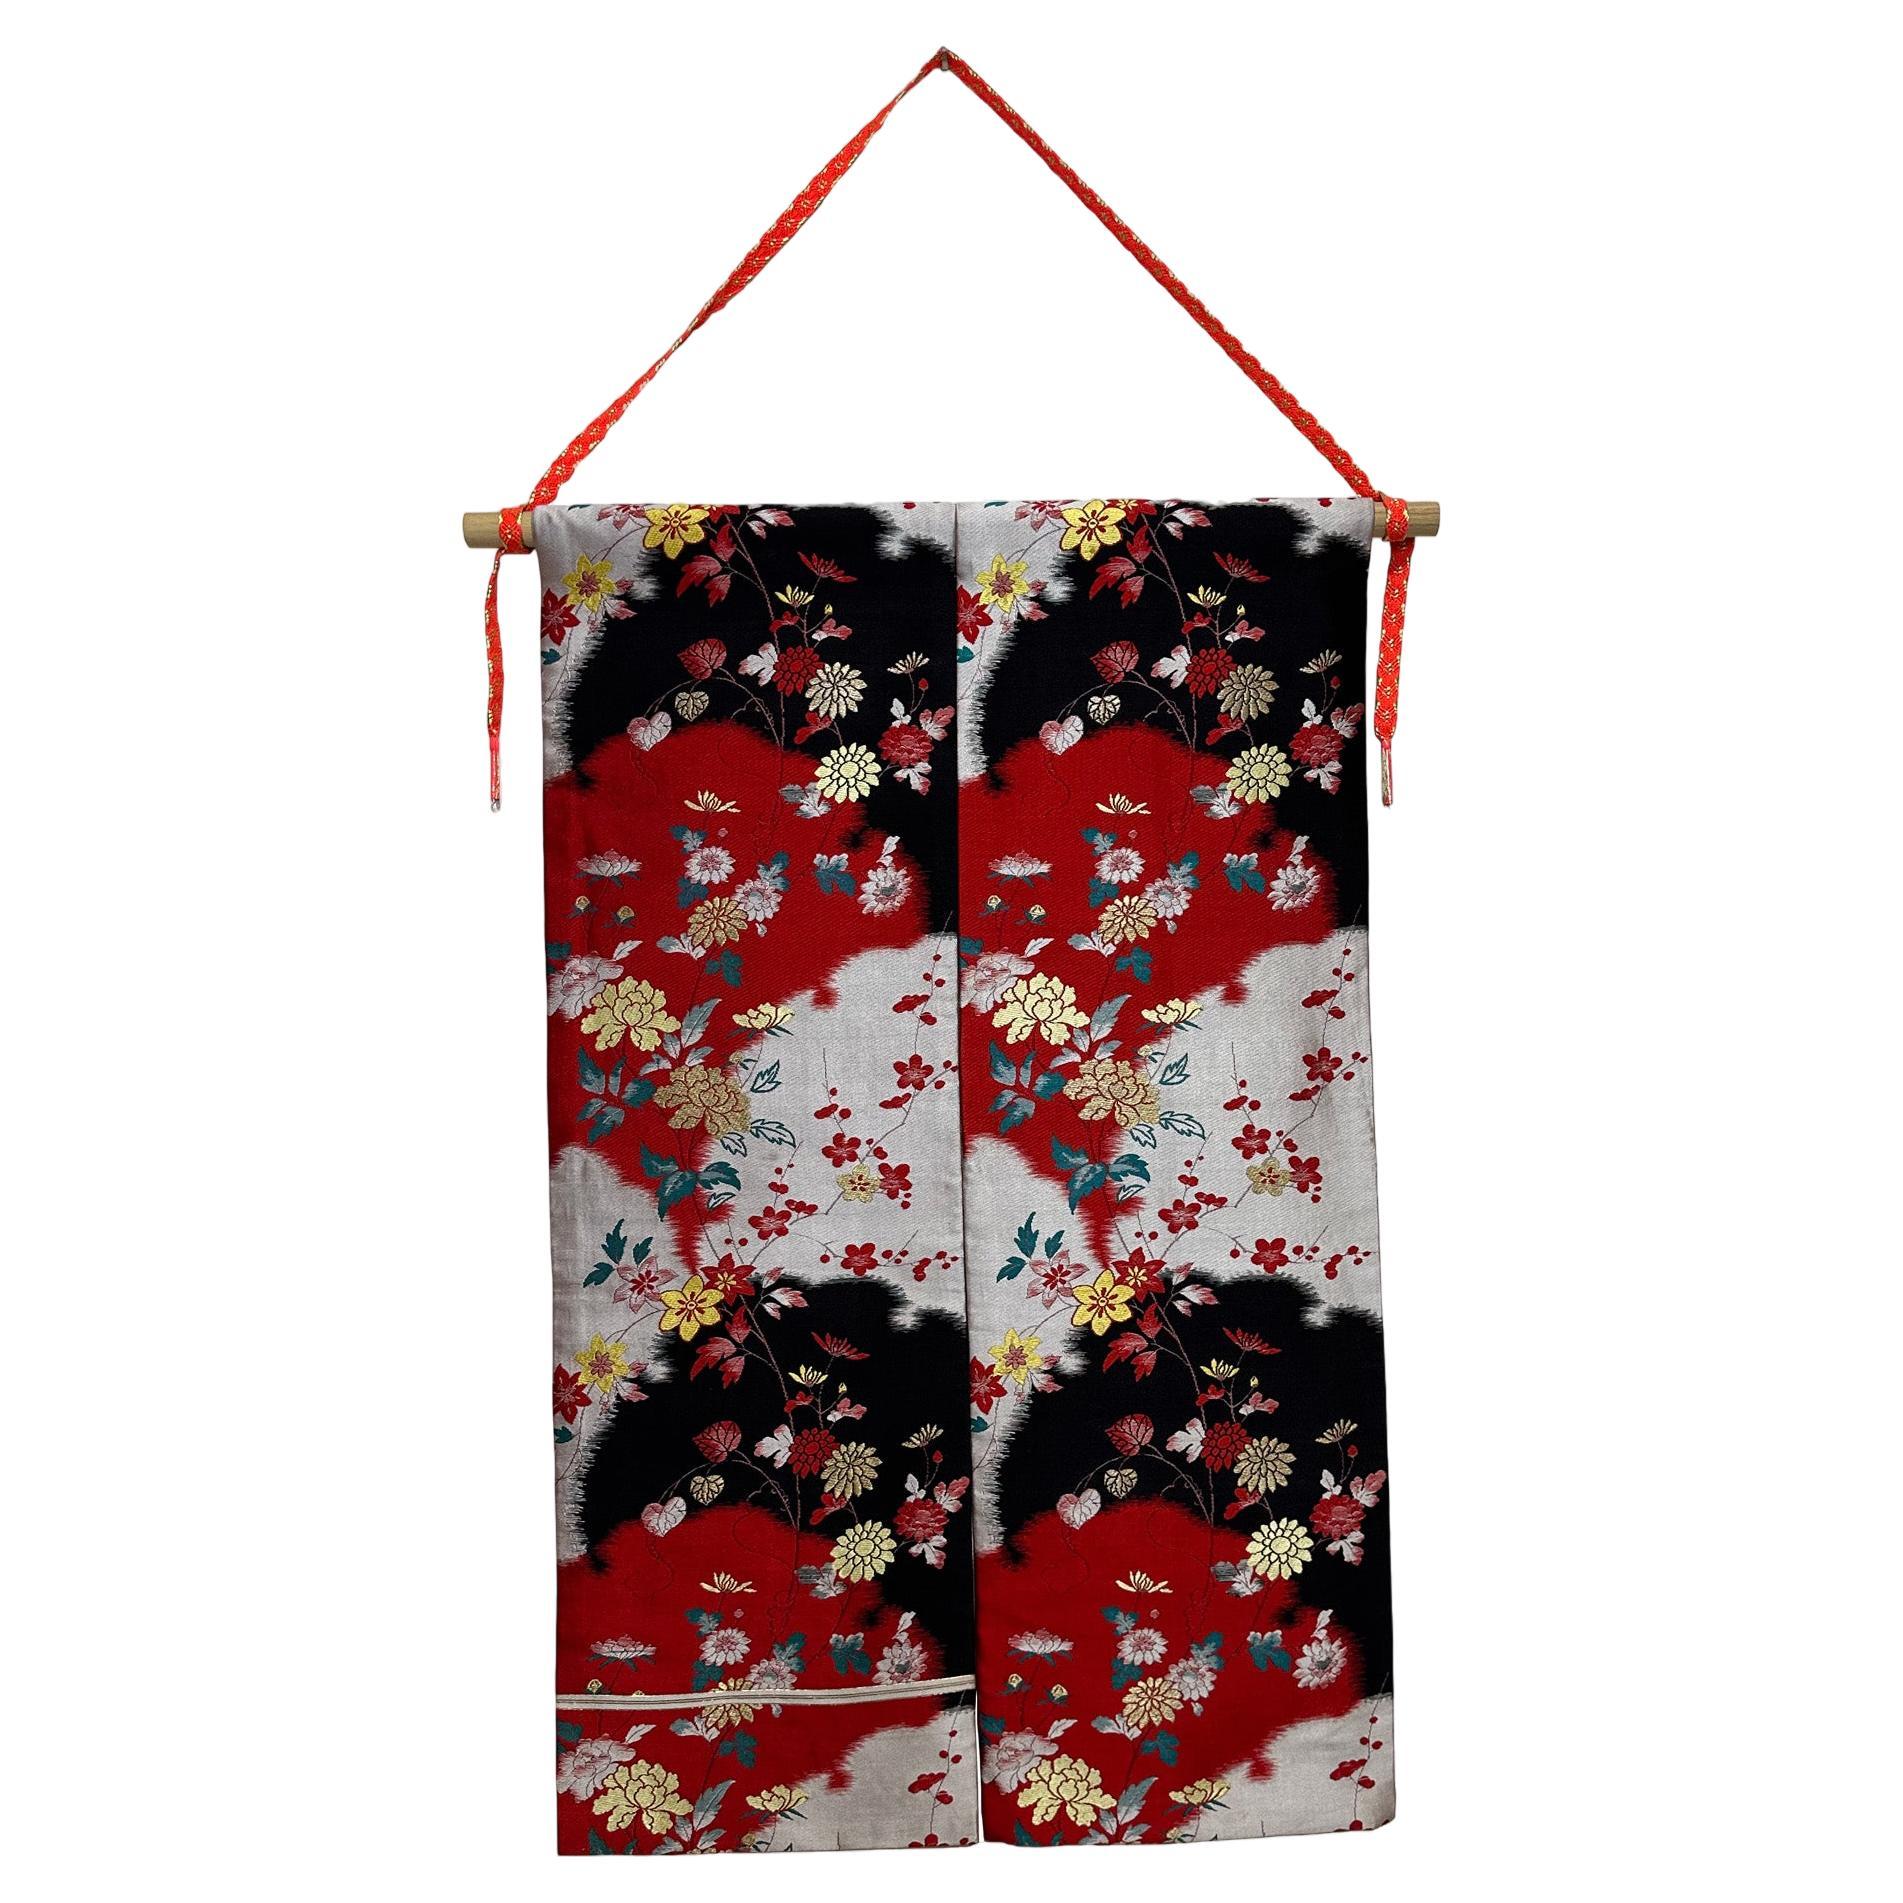 "Seasonal Blessings" by Kimono-Couture, Japanese Art / Kimono Tapestry For Sale